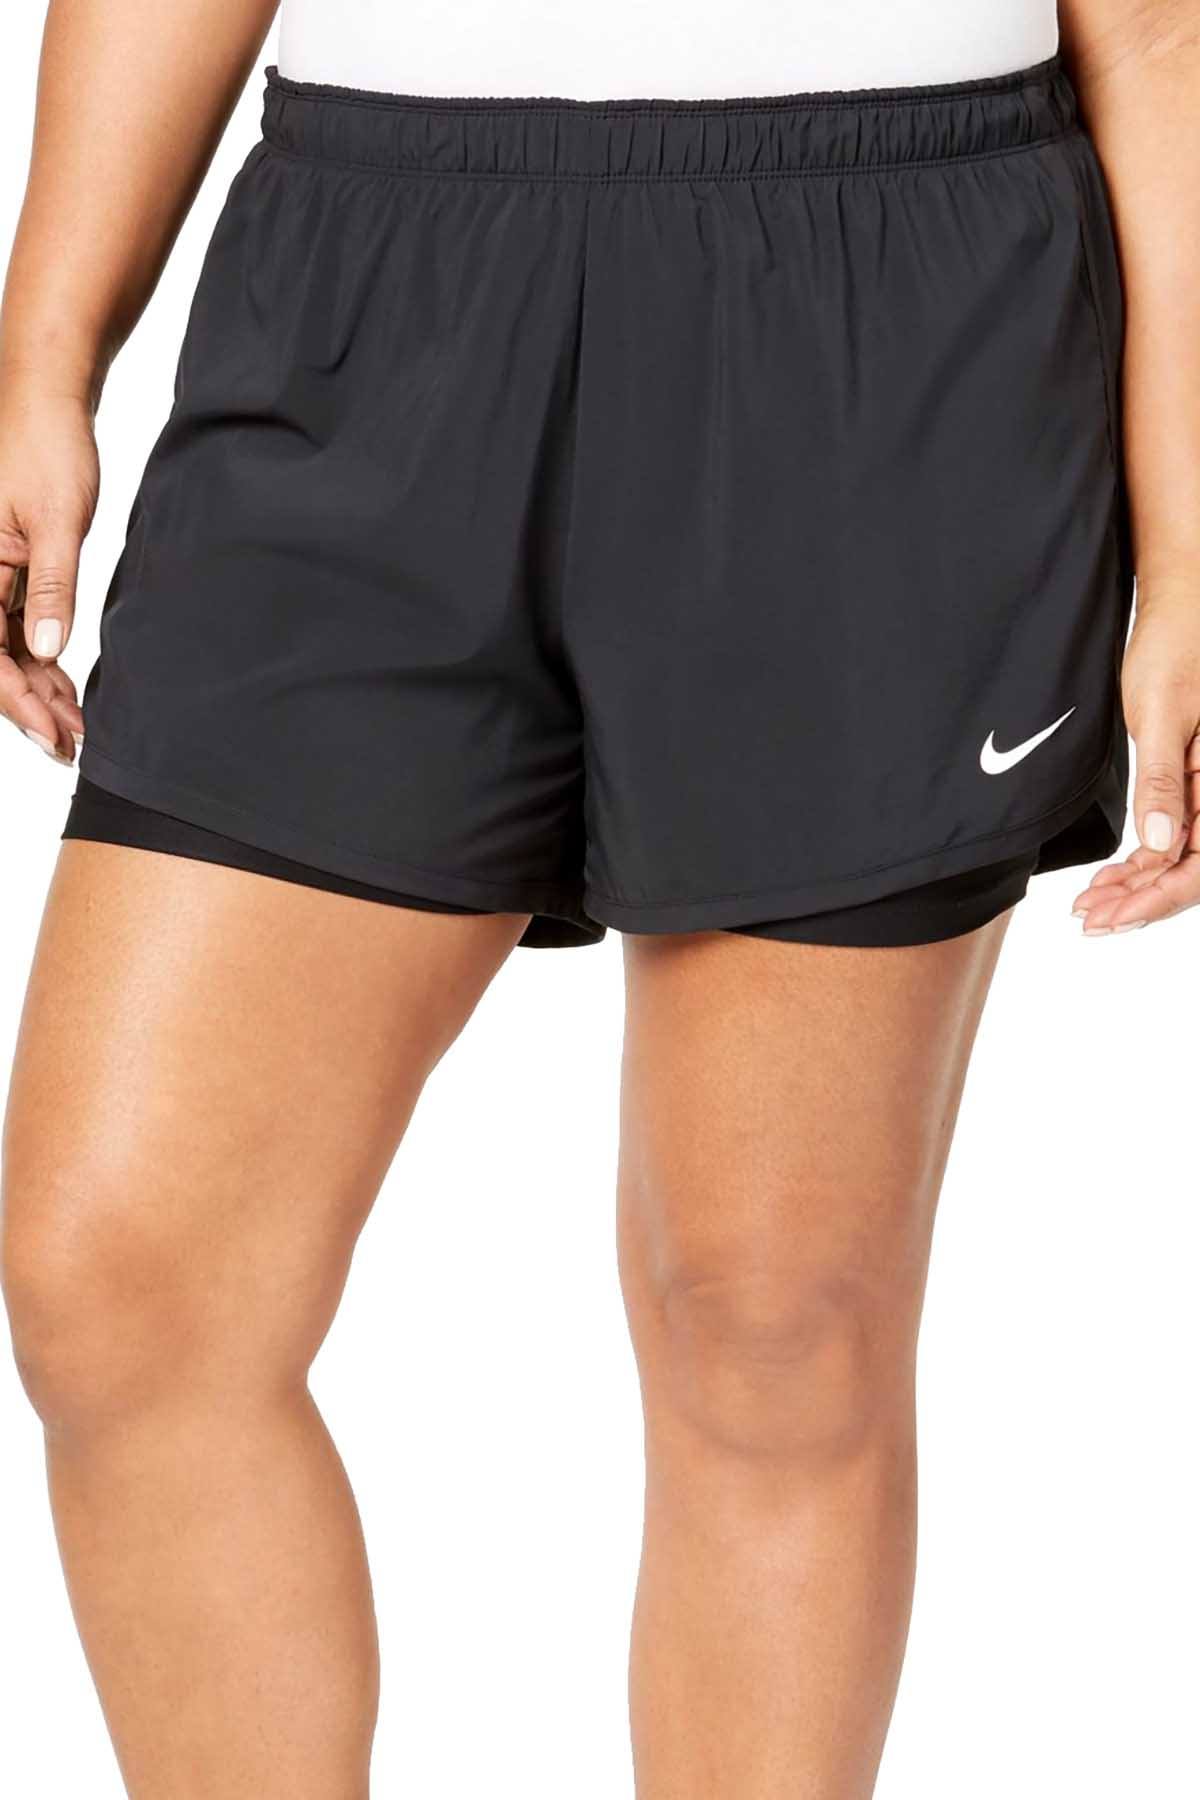 Nike PLUS Black/White Flex 2-in-1 Short